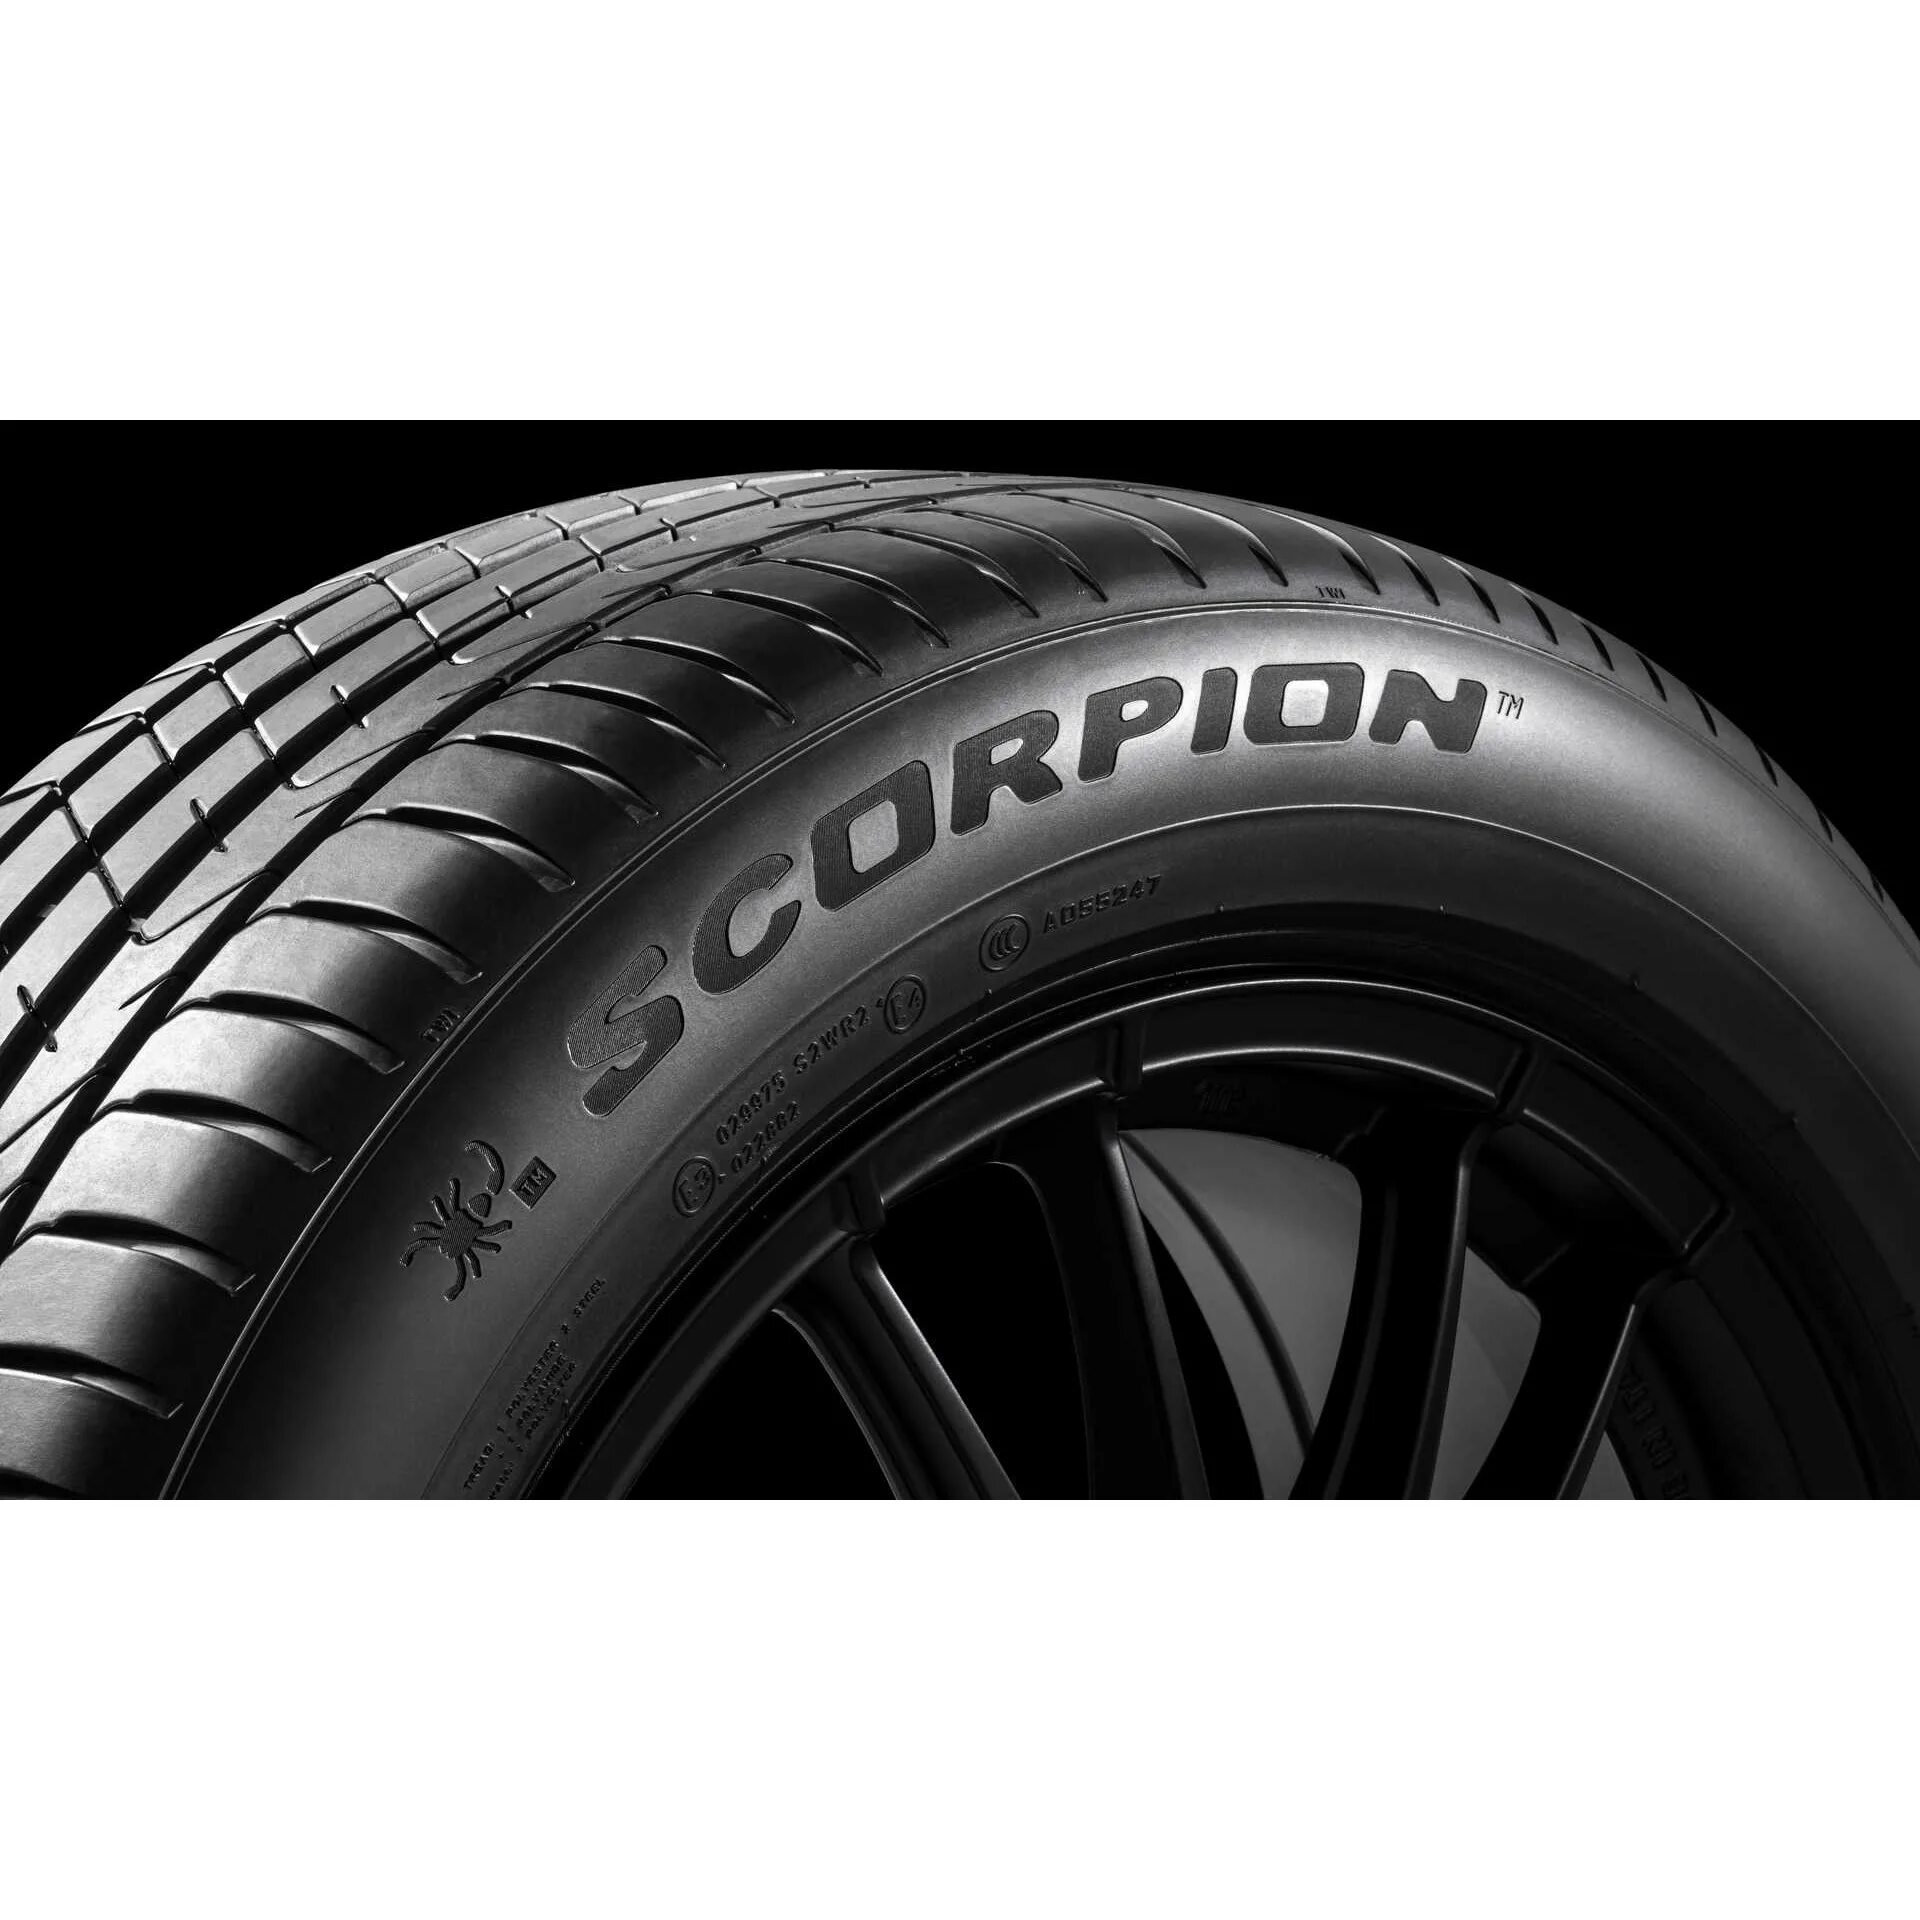 Pirelli Scorpion 215/60 r16 95v. Автошина 235/50 r19 Pirelli Scorpion 99v. Pirelli Scorpion 255/50 r19. Шины Пирелли Скорпион.